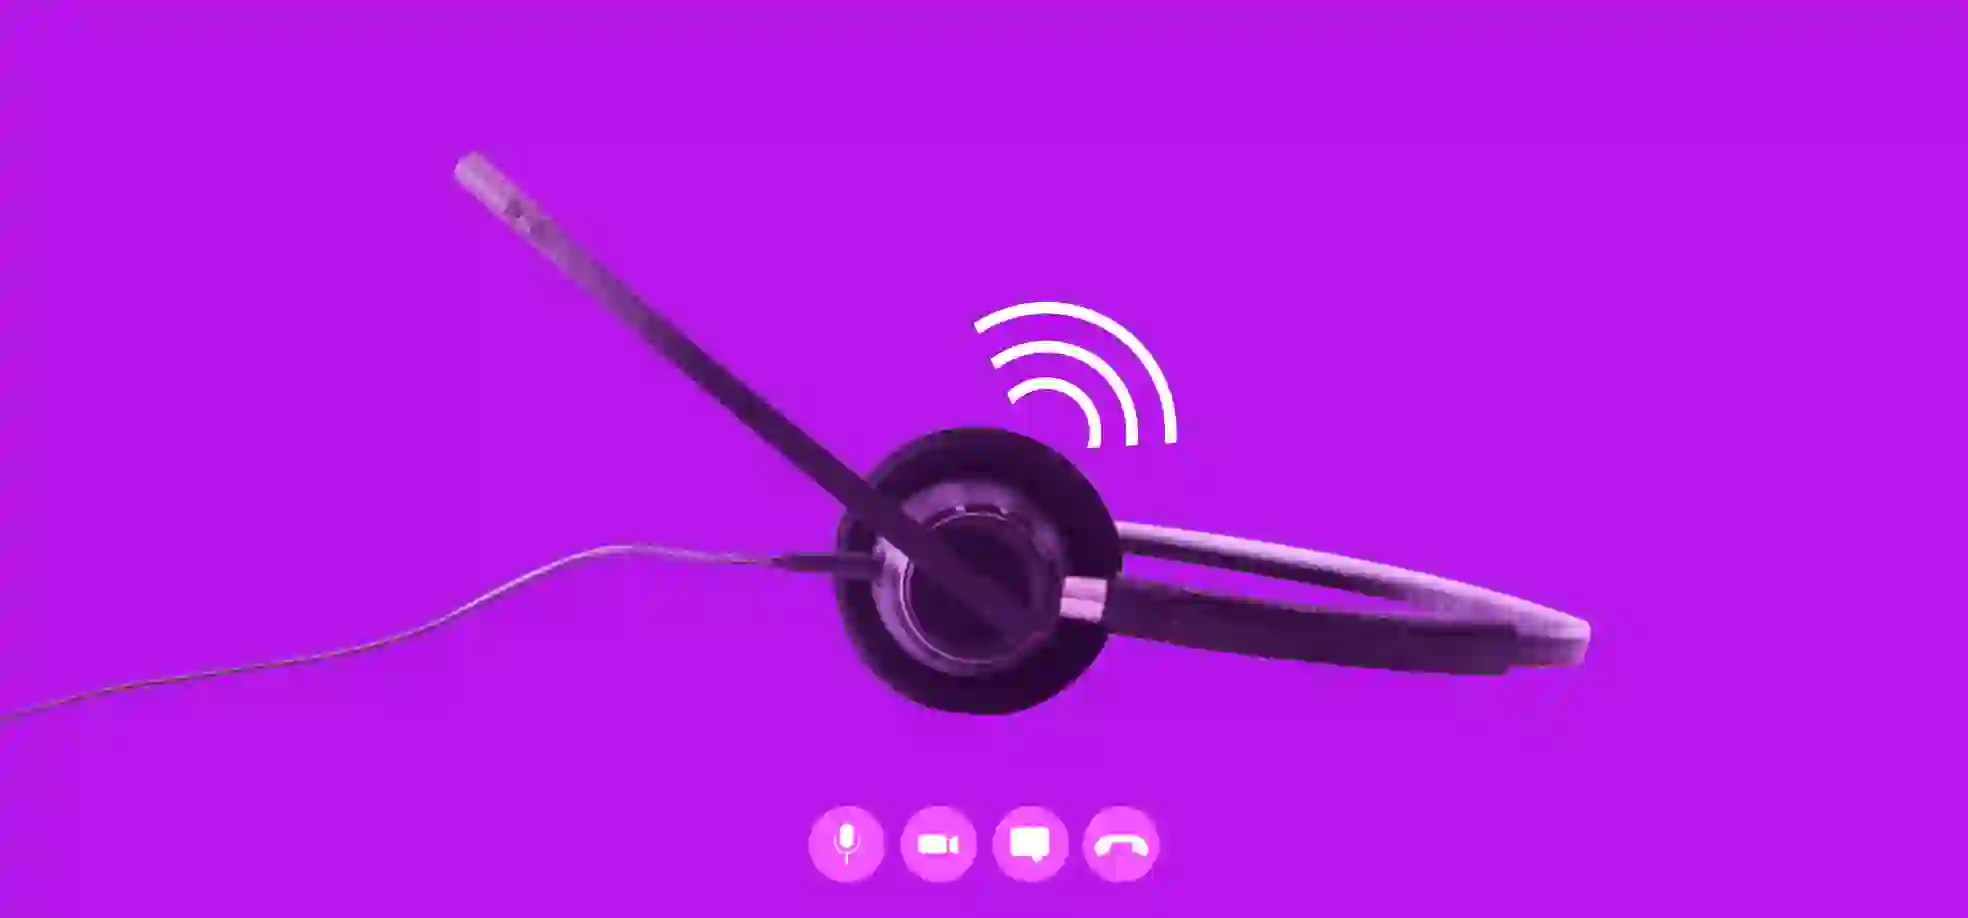 Headphones on a purple background